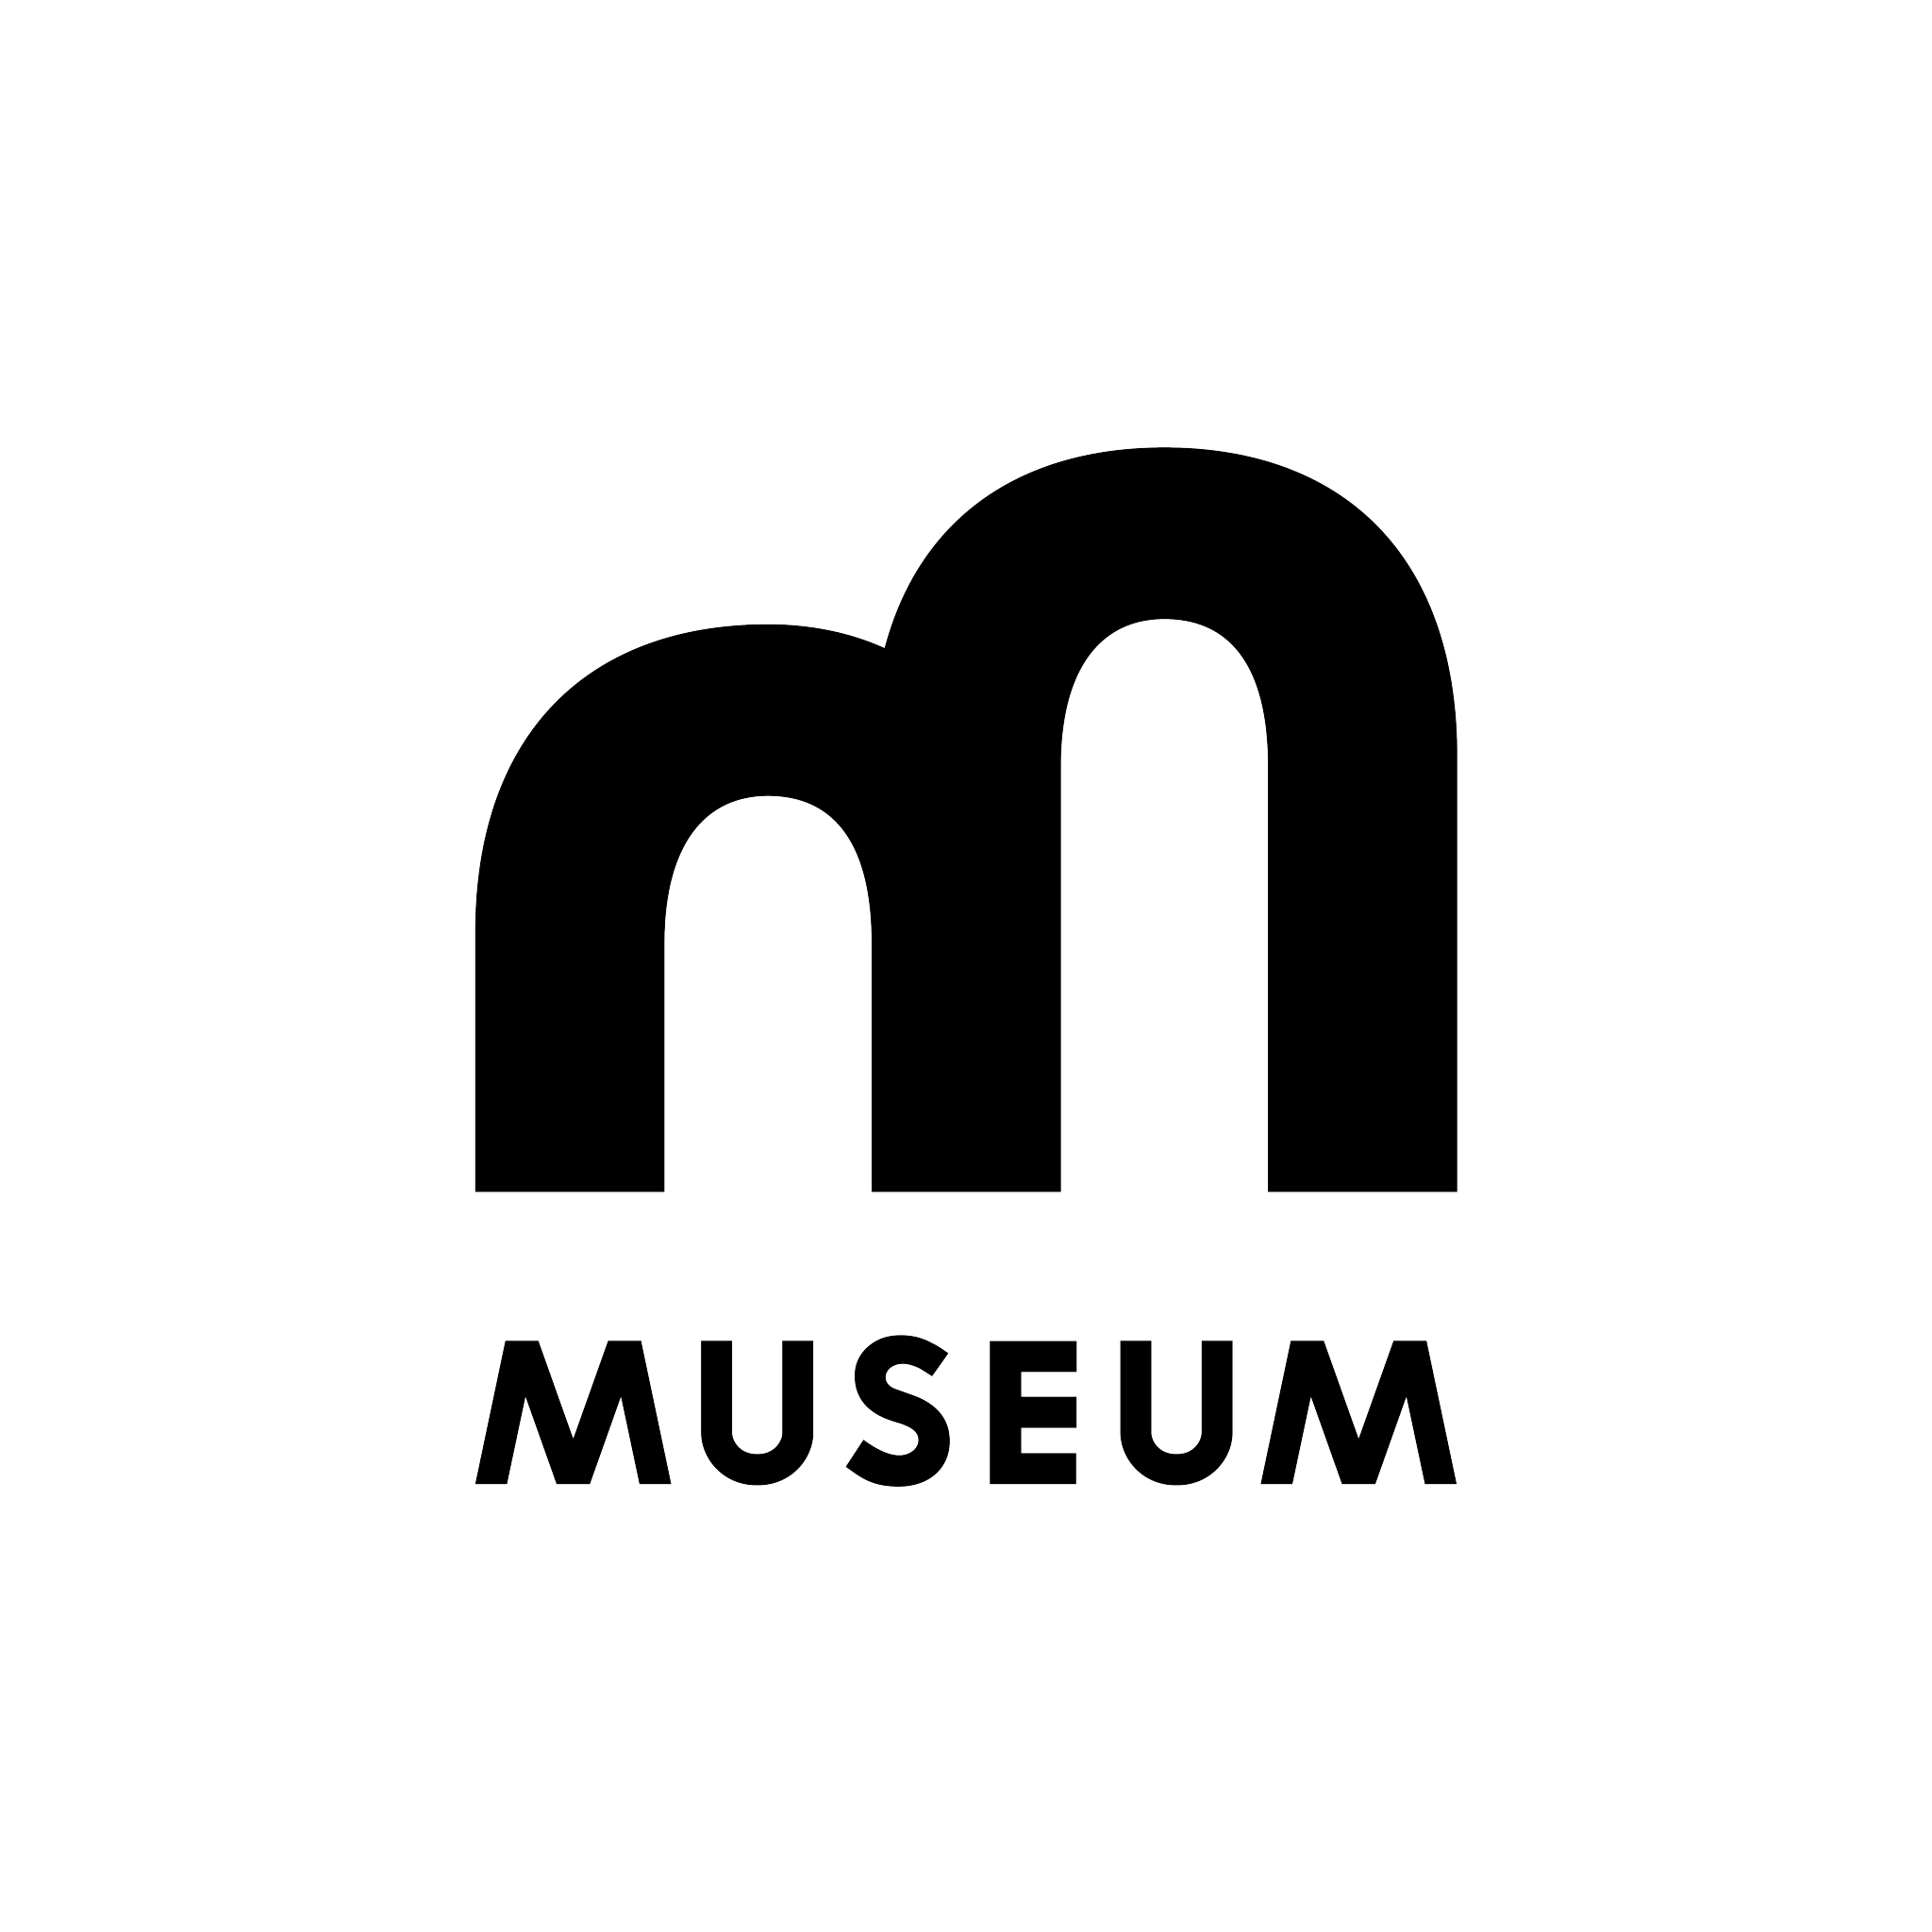 Museum Logo - File:Logo museum 2017.png - Wikimedia Commons